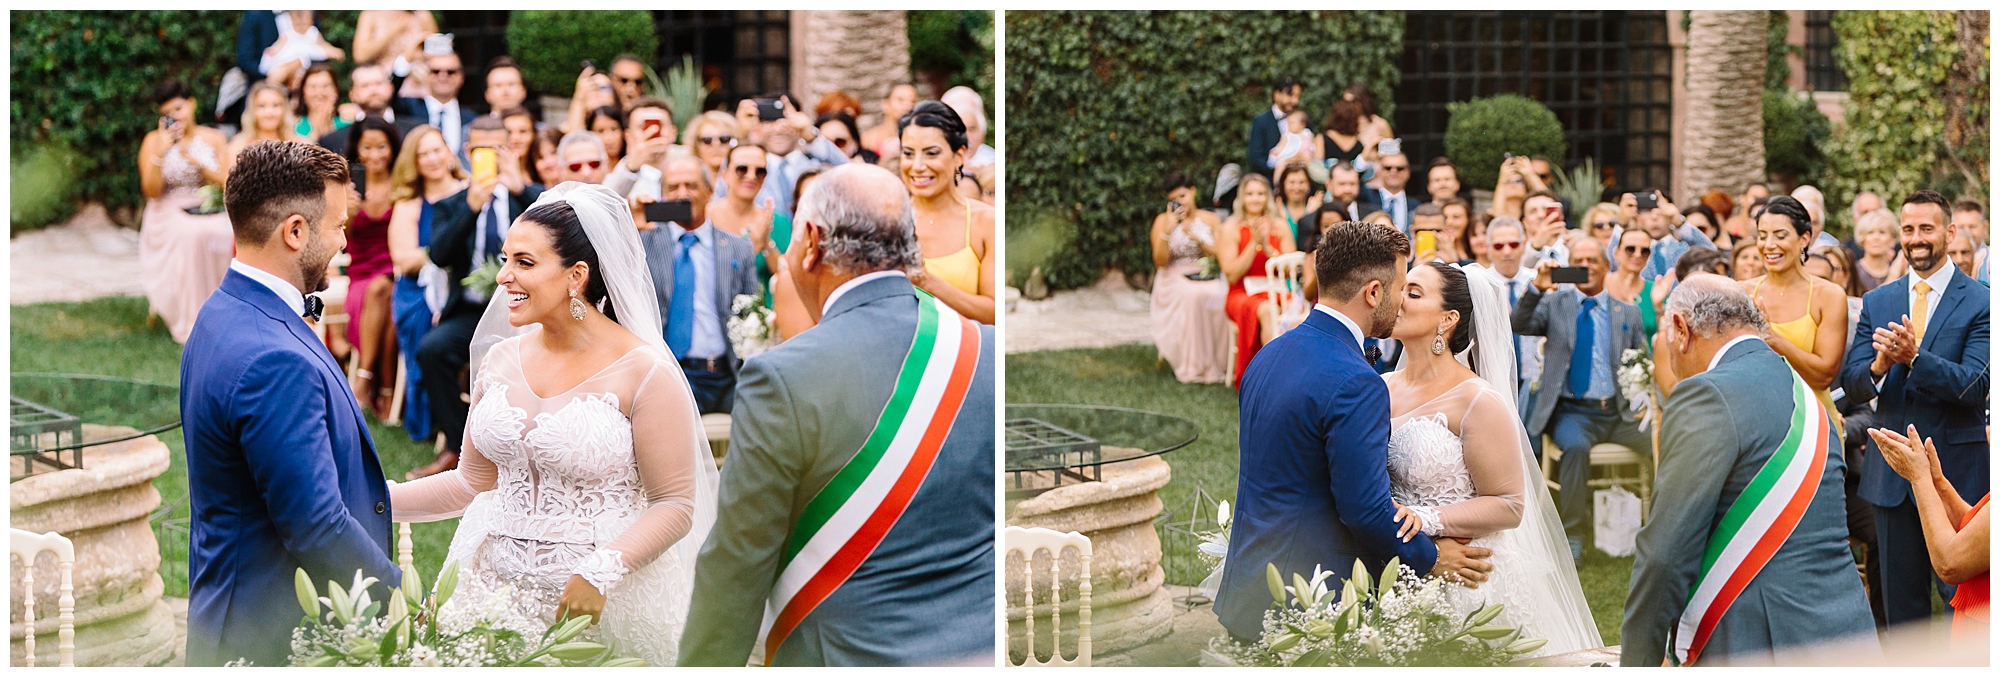 KrystaNormanPhoto_Castello_Monaci_Puglia_Italy_Destination_Wedding_Photographer_Krysta_Norman__0039.jpg